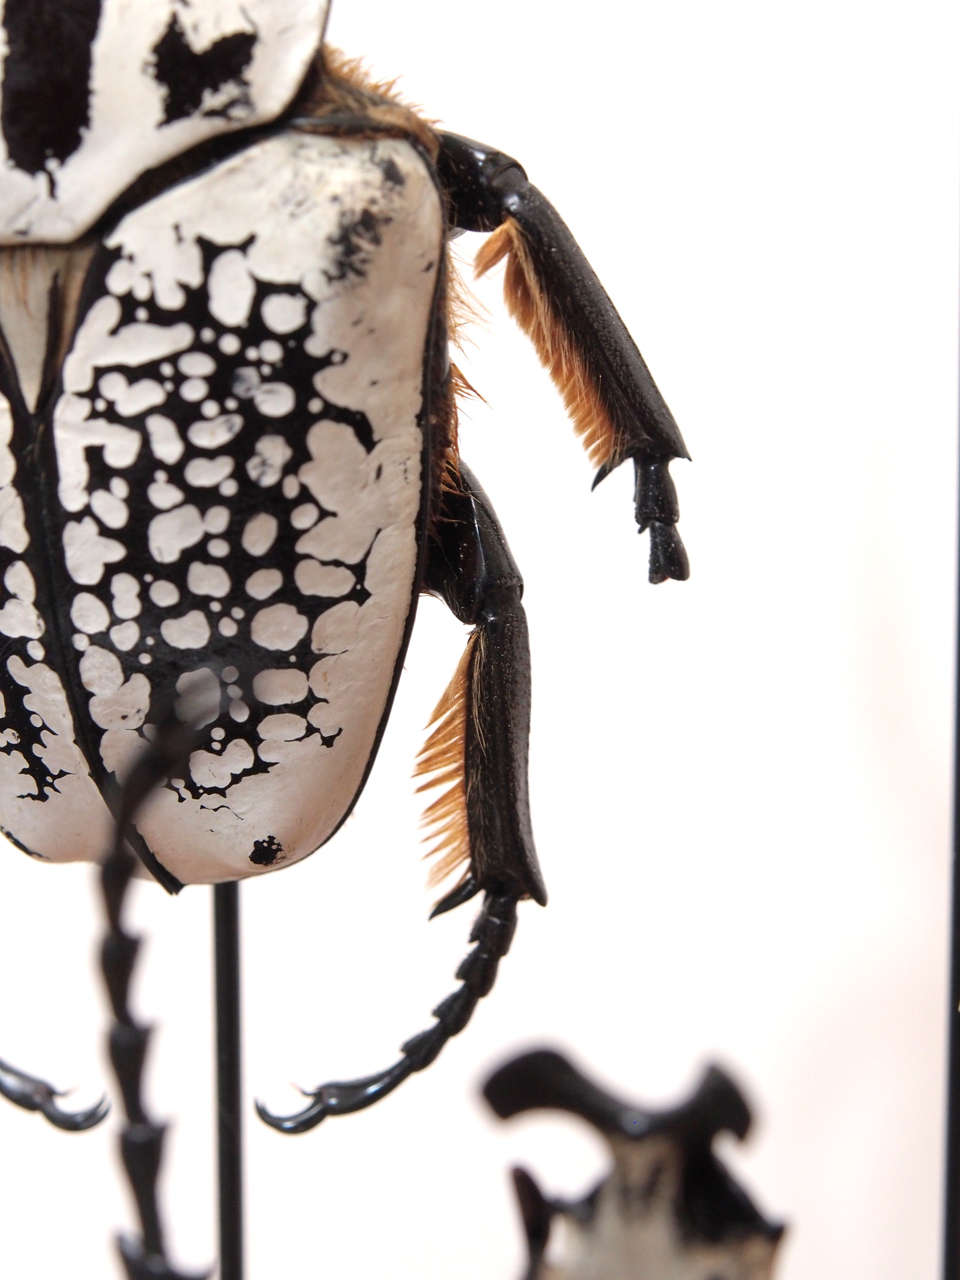 Specimen Beetles Under Glass Dome 1